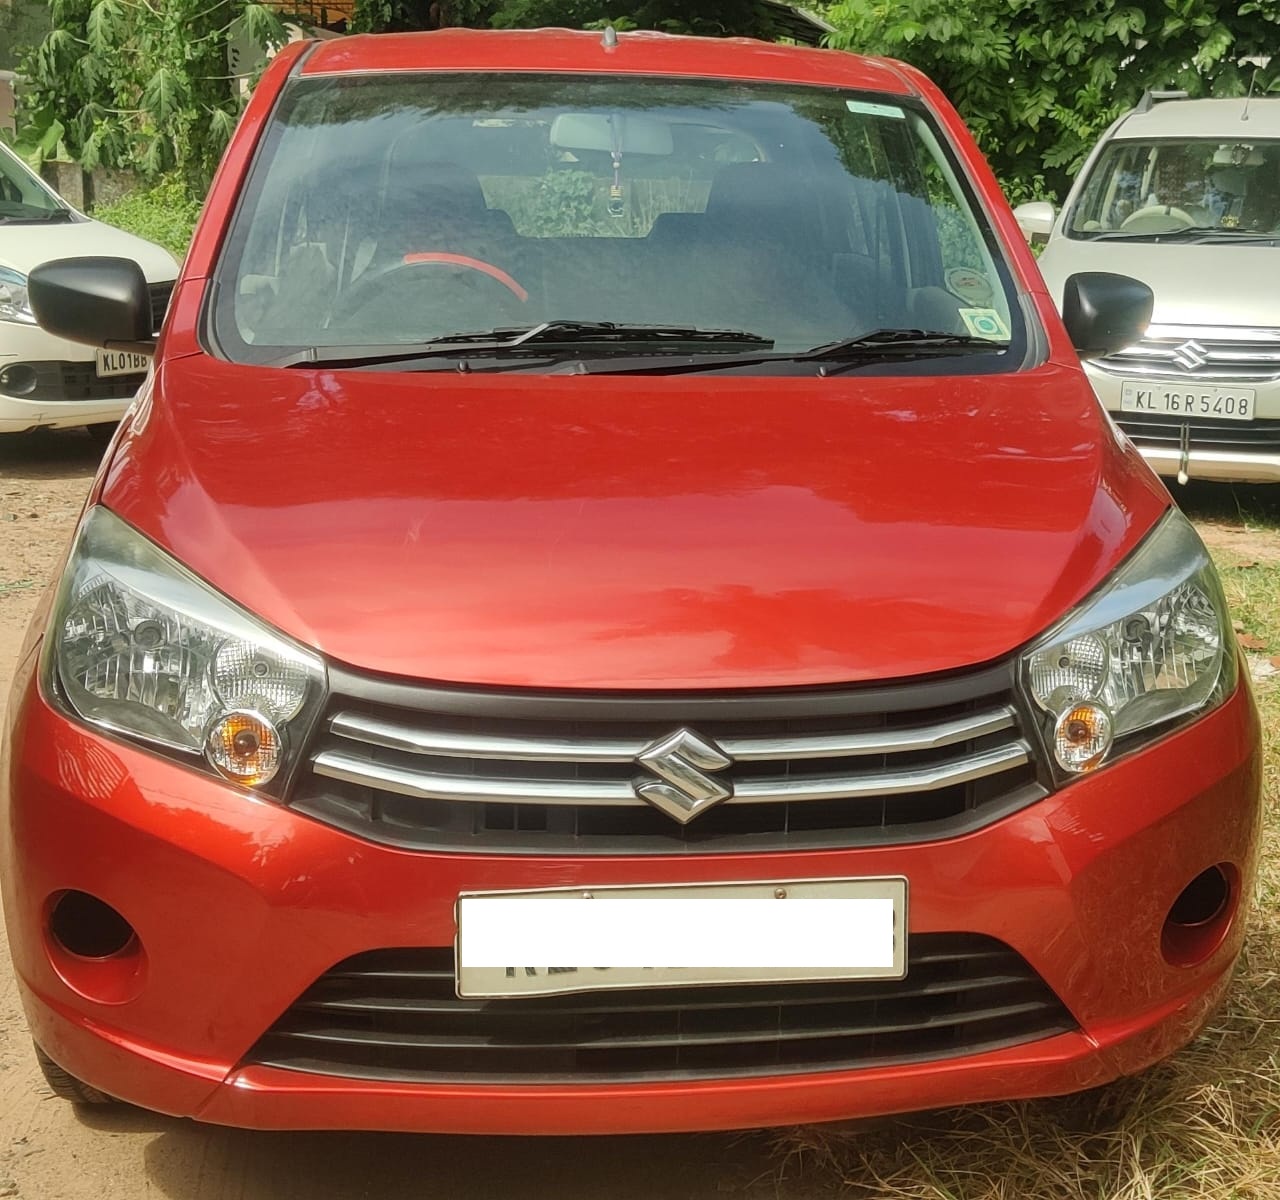 MARUTI CELERIO 2014 Second-hand Car for Sale in Trivandrum